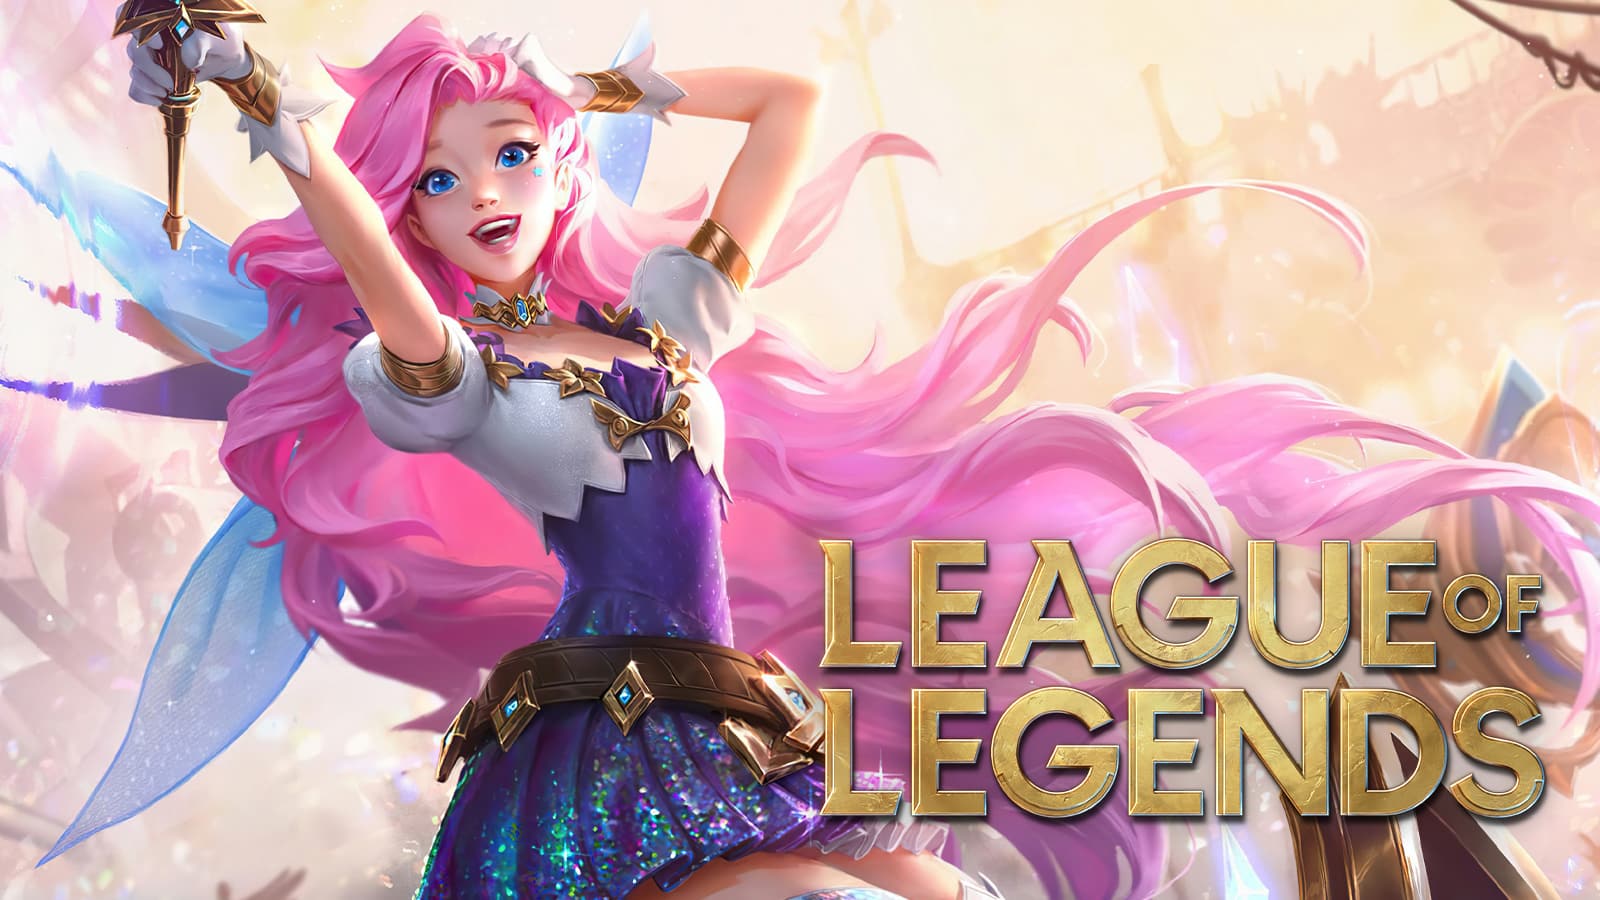 Seraphine - League of Legends